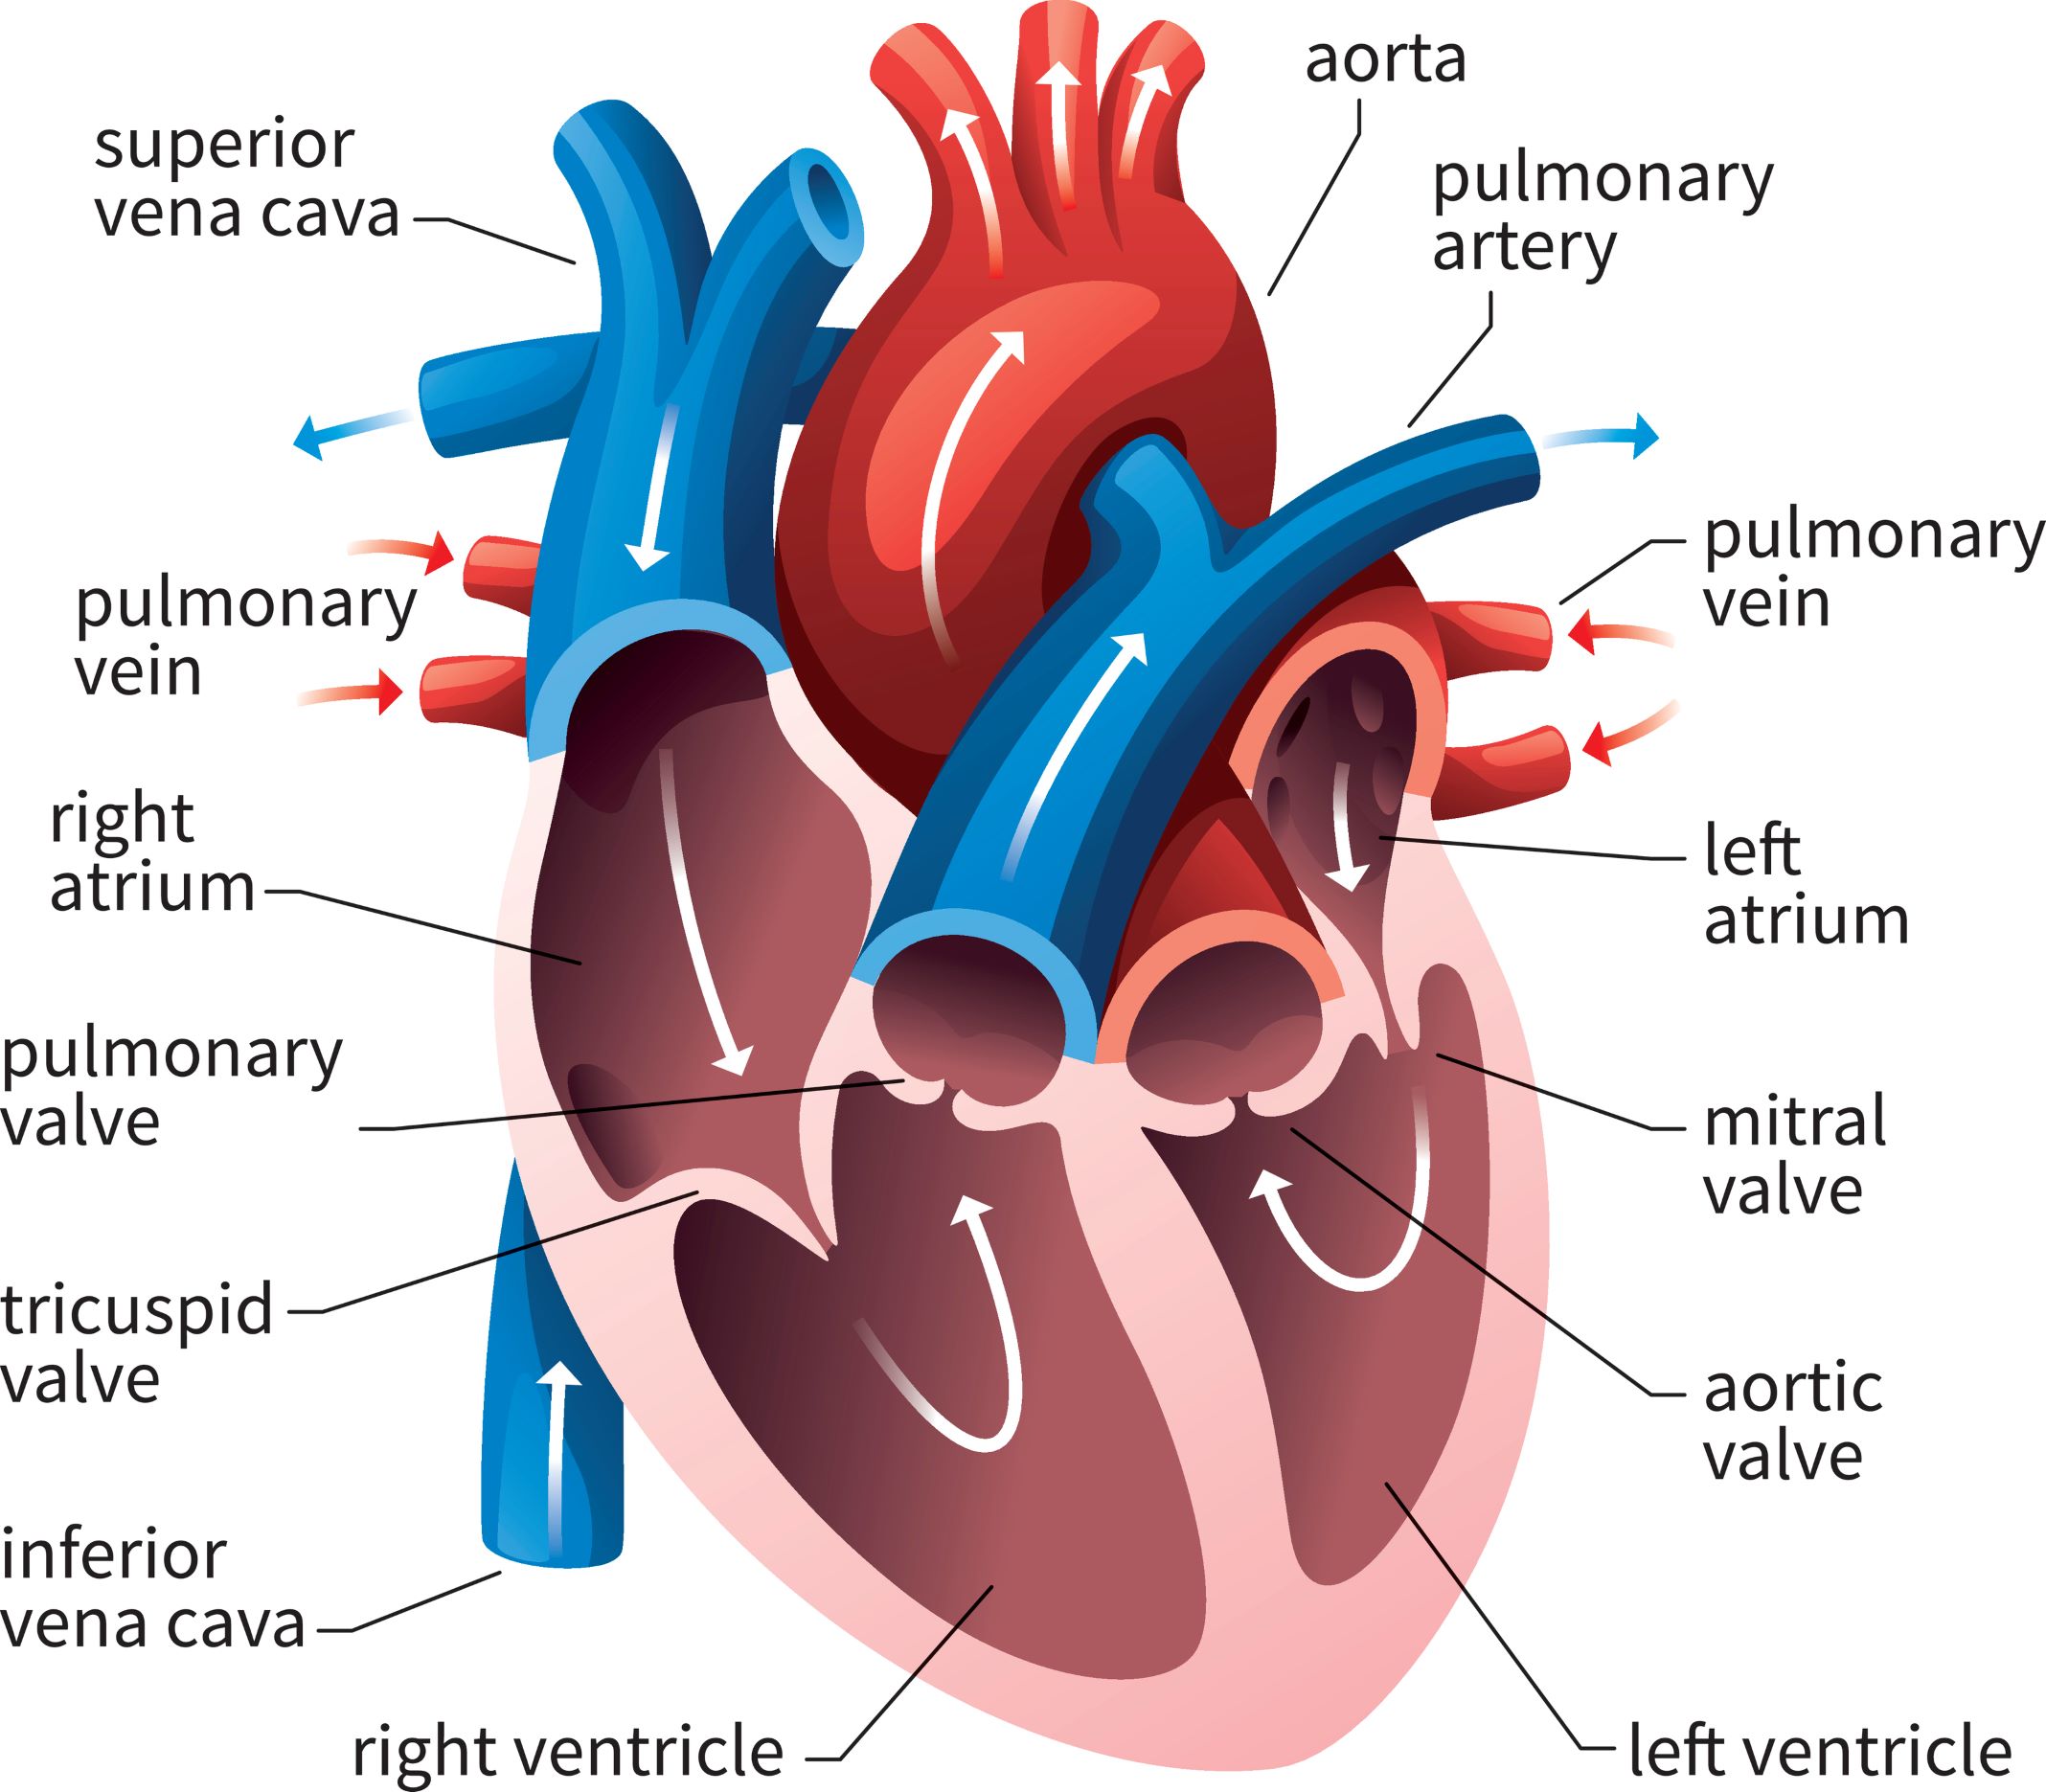 Heart Anatomy Labeling